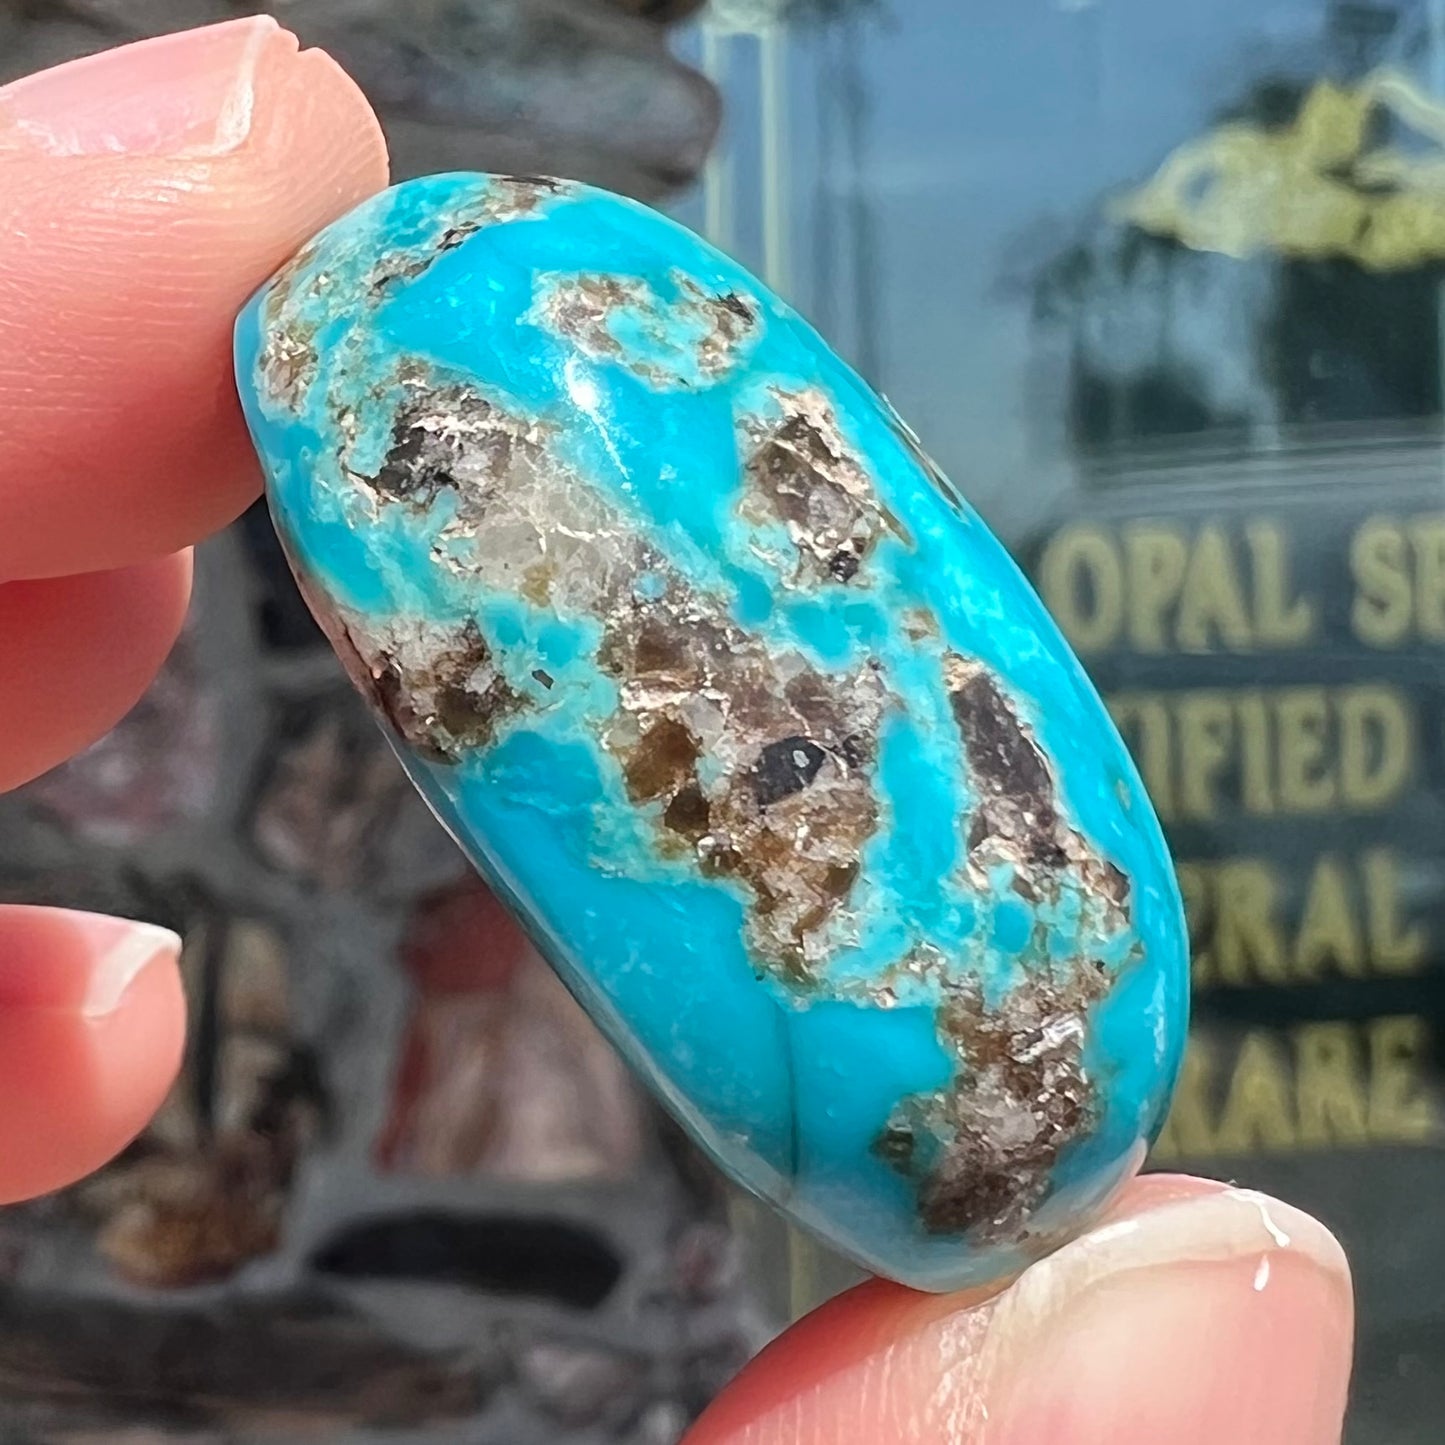 A loose, oval cabochon cut turquoise stone from Kingman, Arizona.